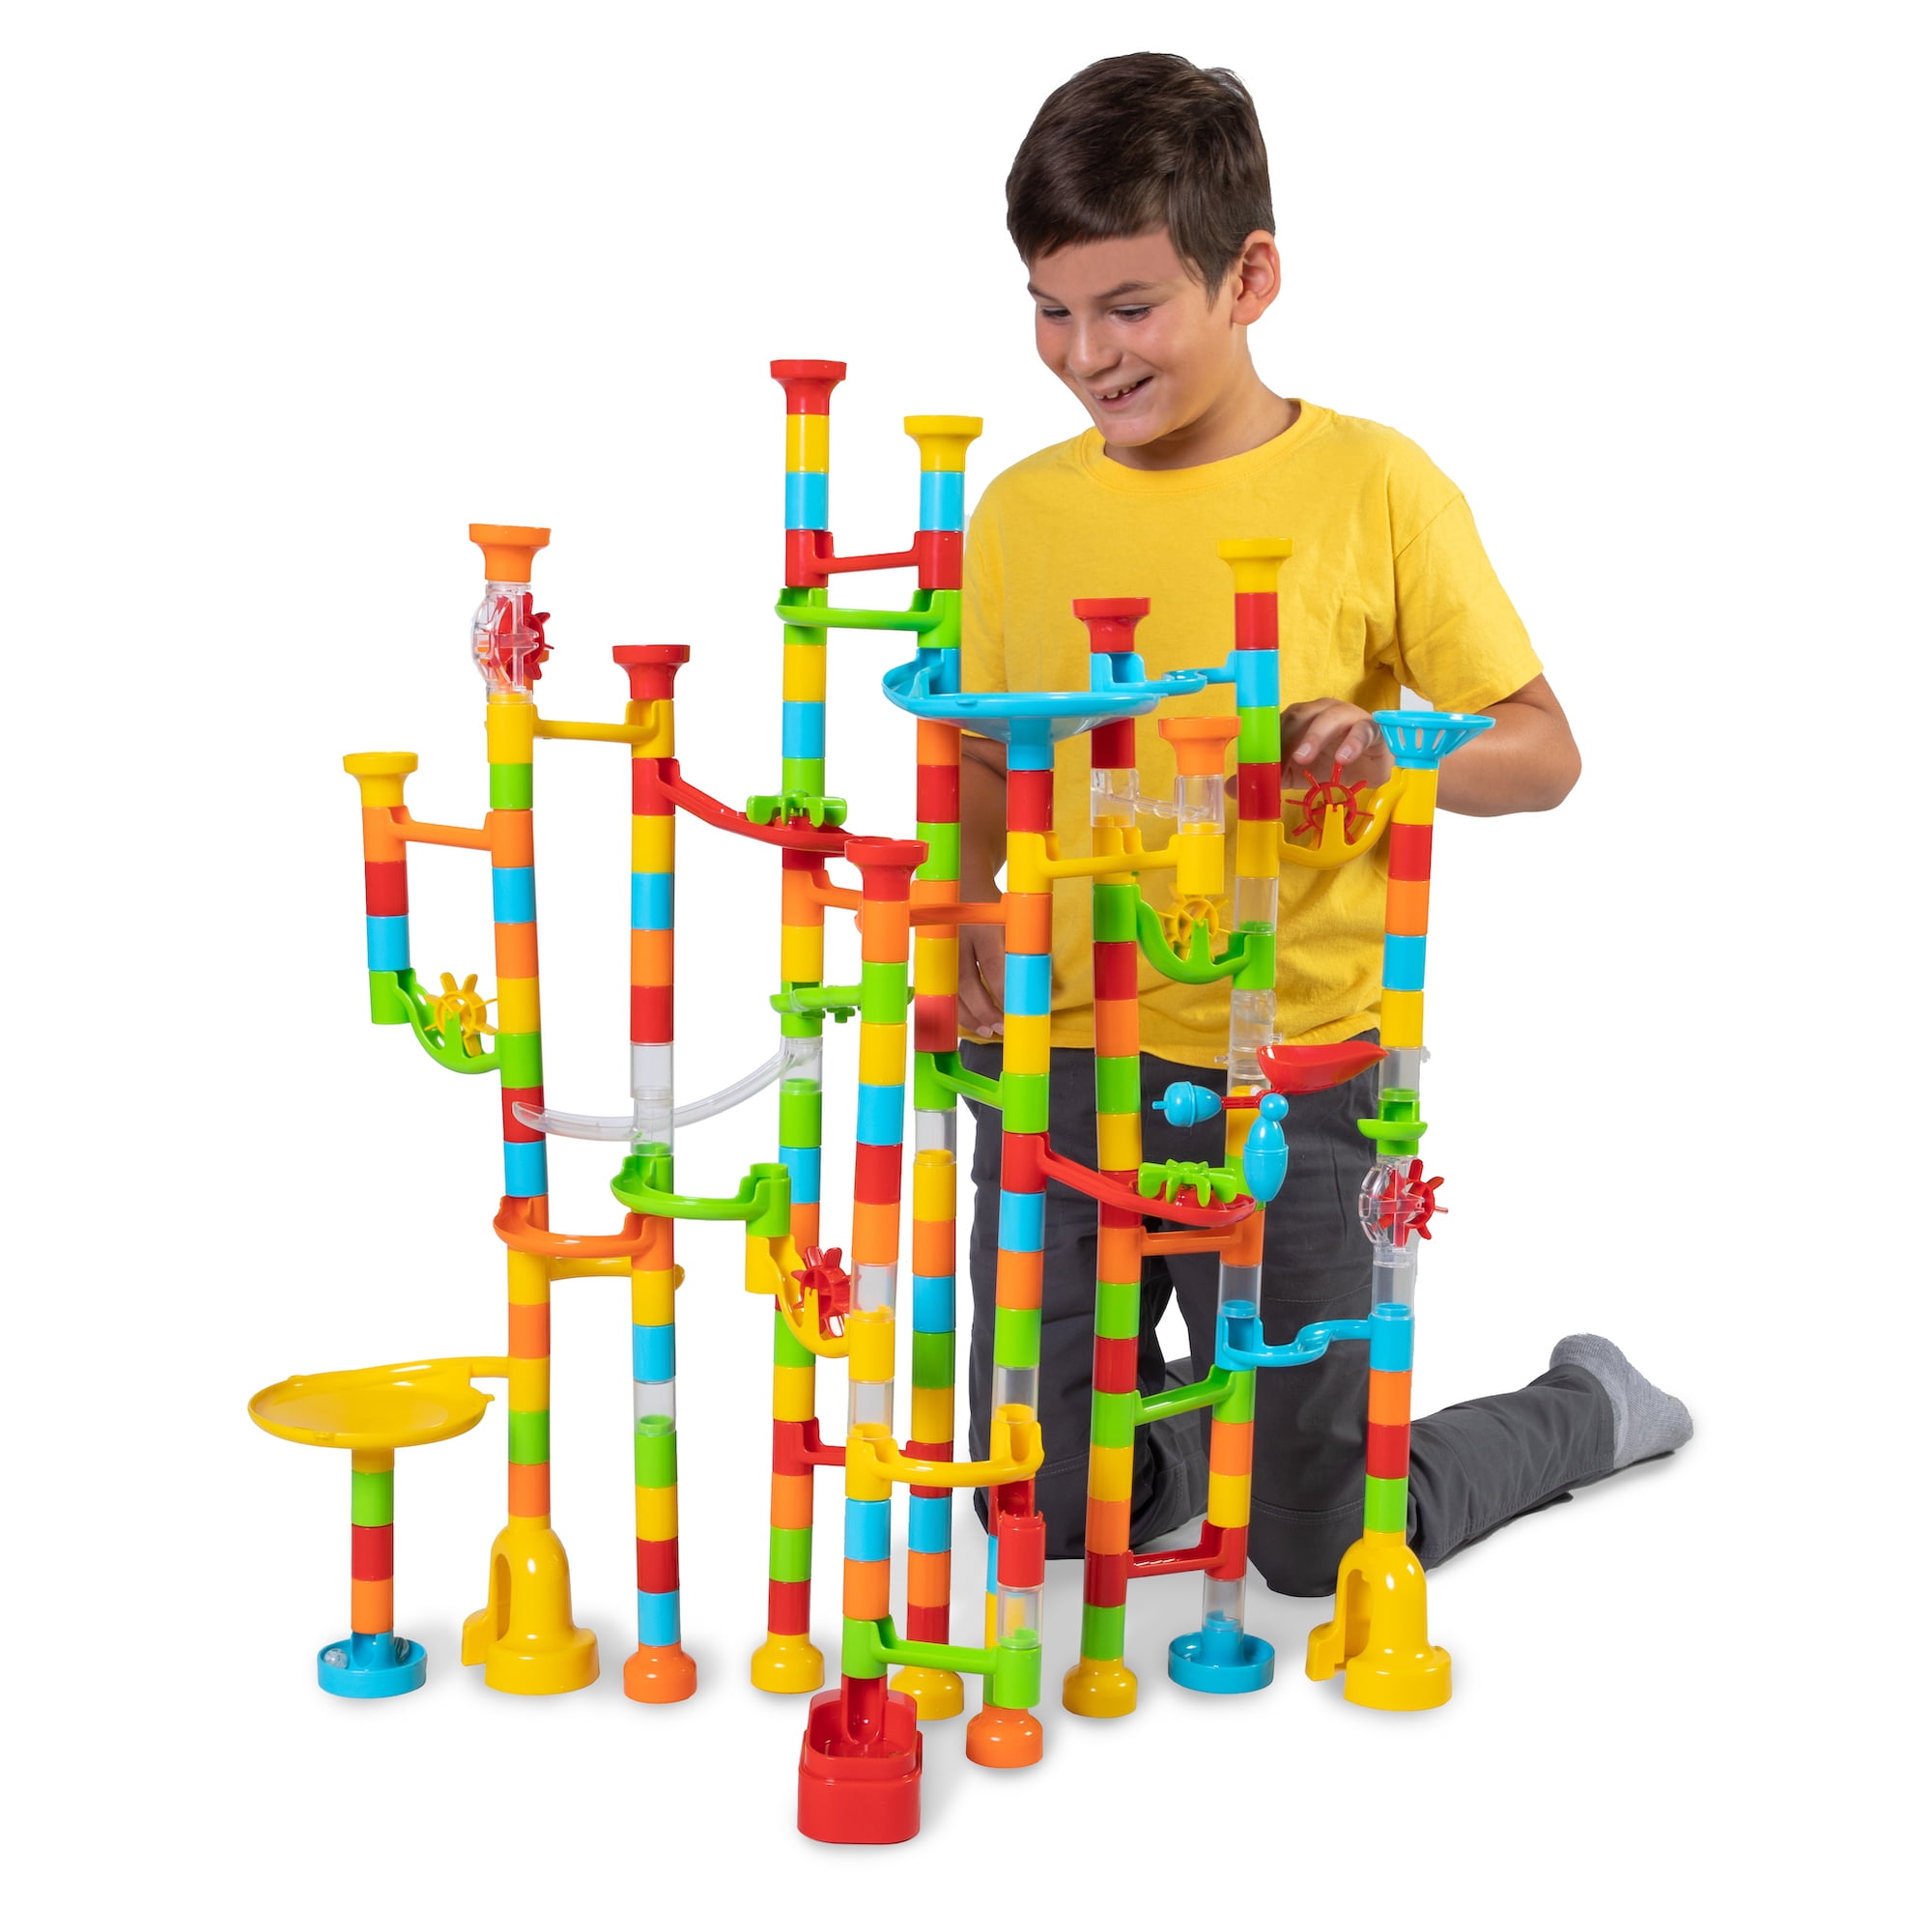 Marble Run Toy 130pcs Marbulous Starter Construction Child Building Blocks Toys for sale online 